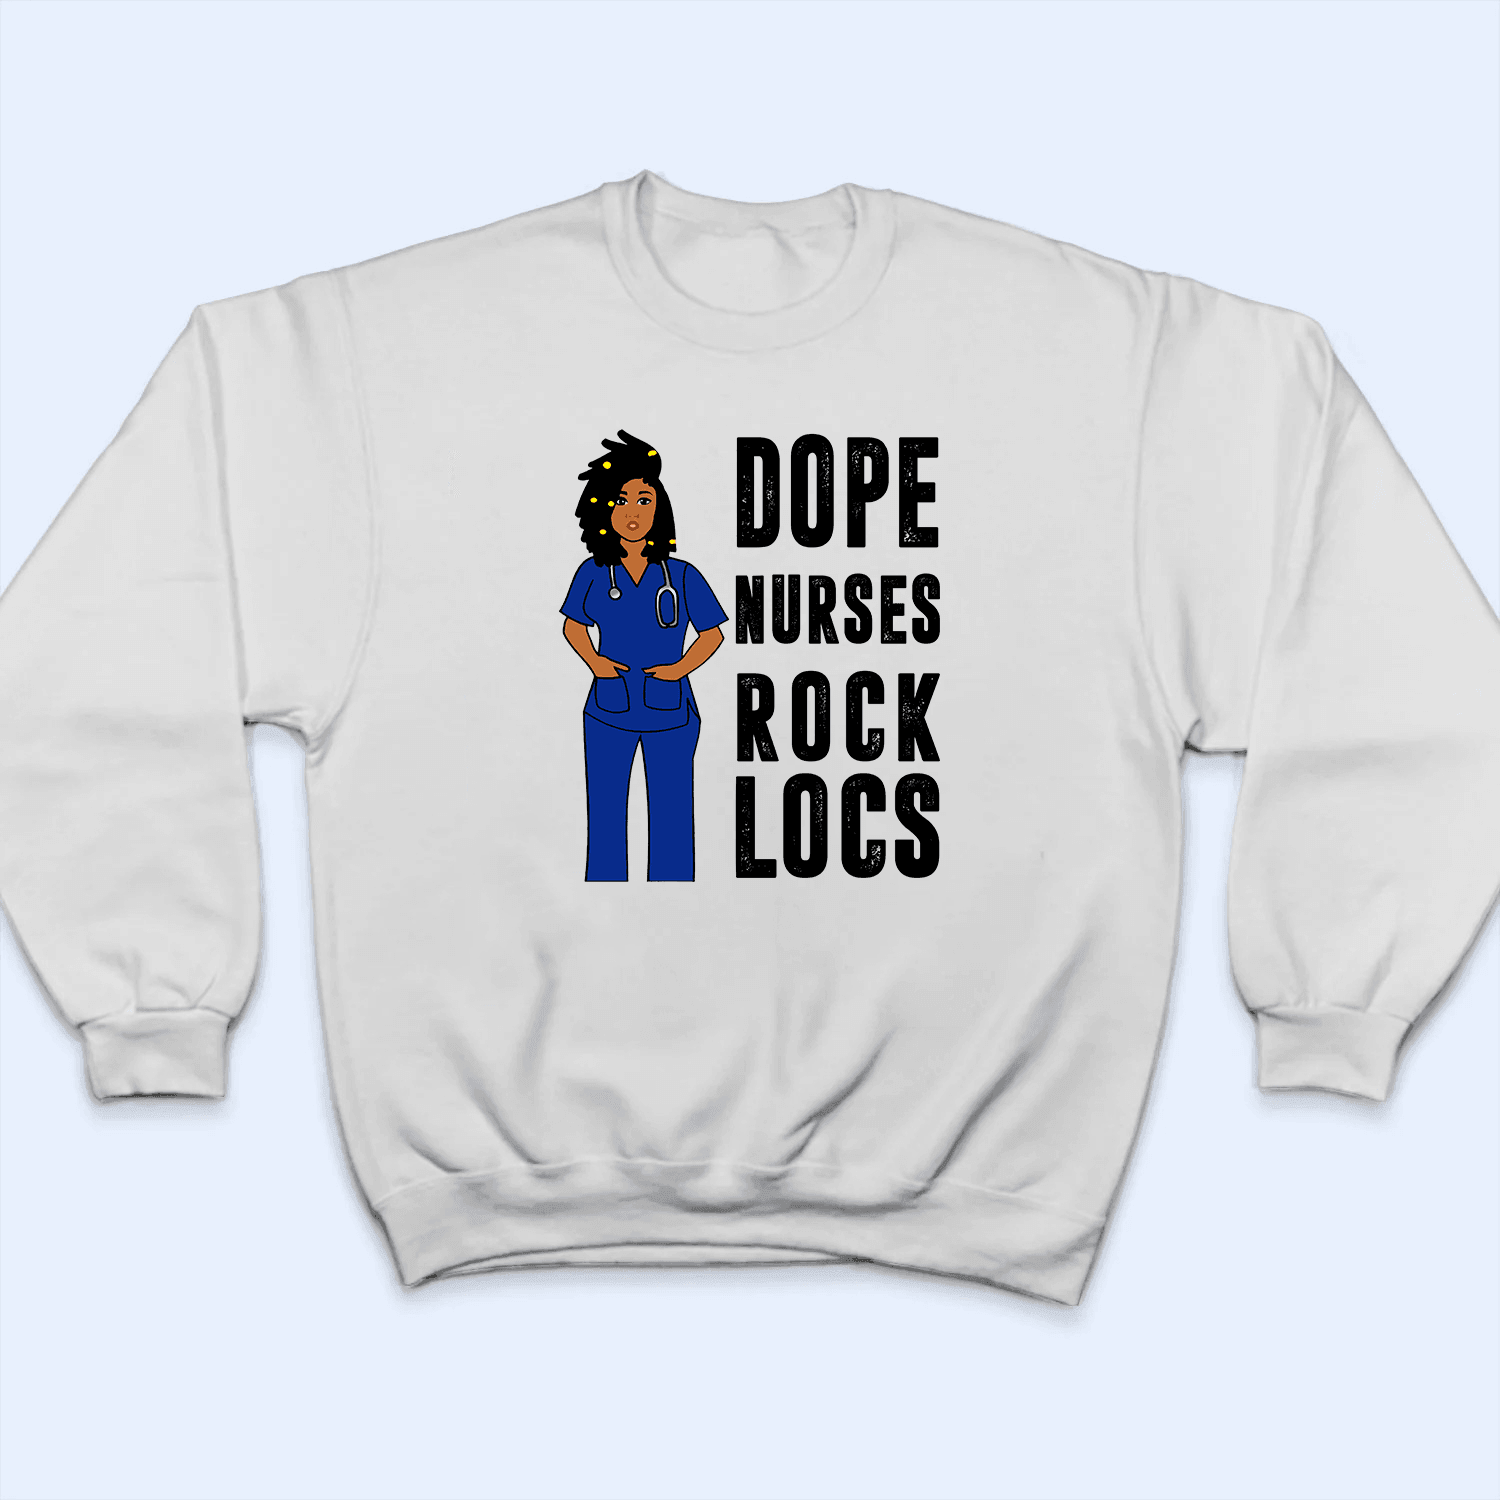 Dope Nurses Rock Locs - Personalized Custom T Shirt - Birthday, Loving, Funny Gift for Nurse, Black Nurse, CNA, Healthcare, Registered RN - Suzitee Store